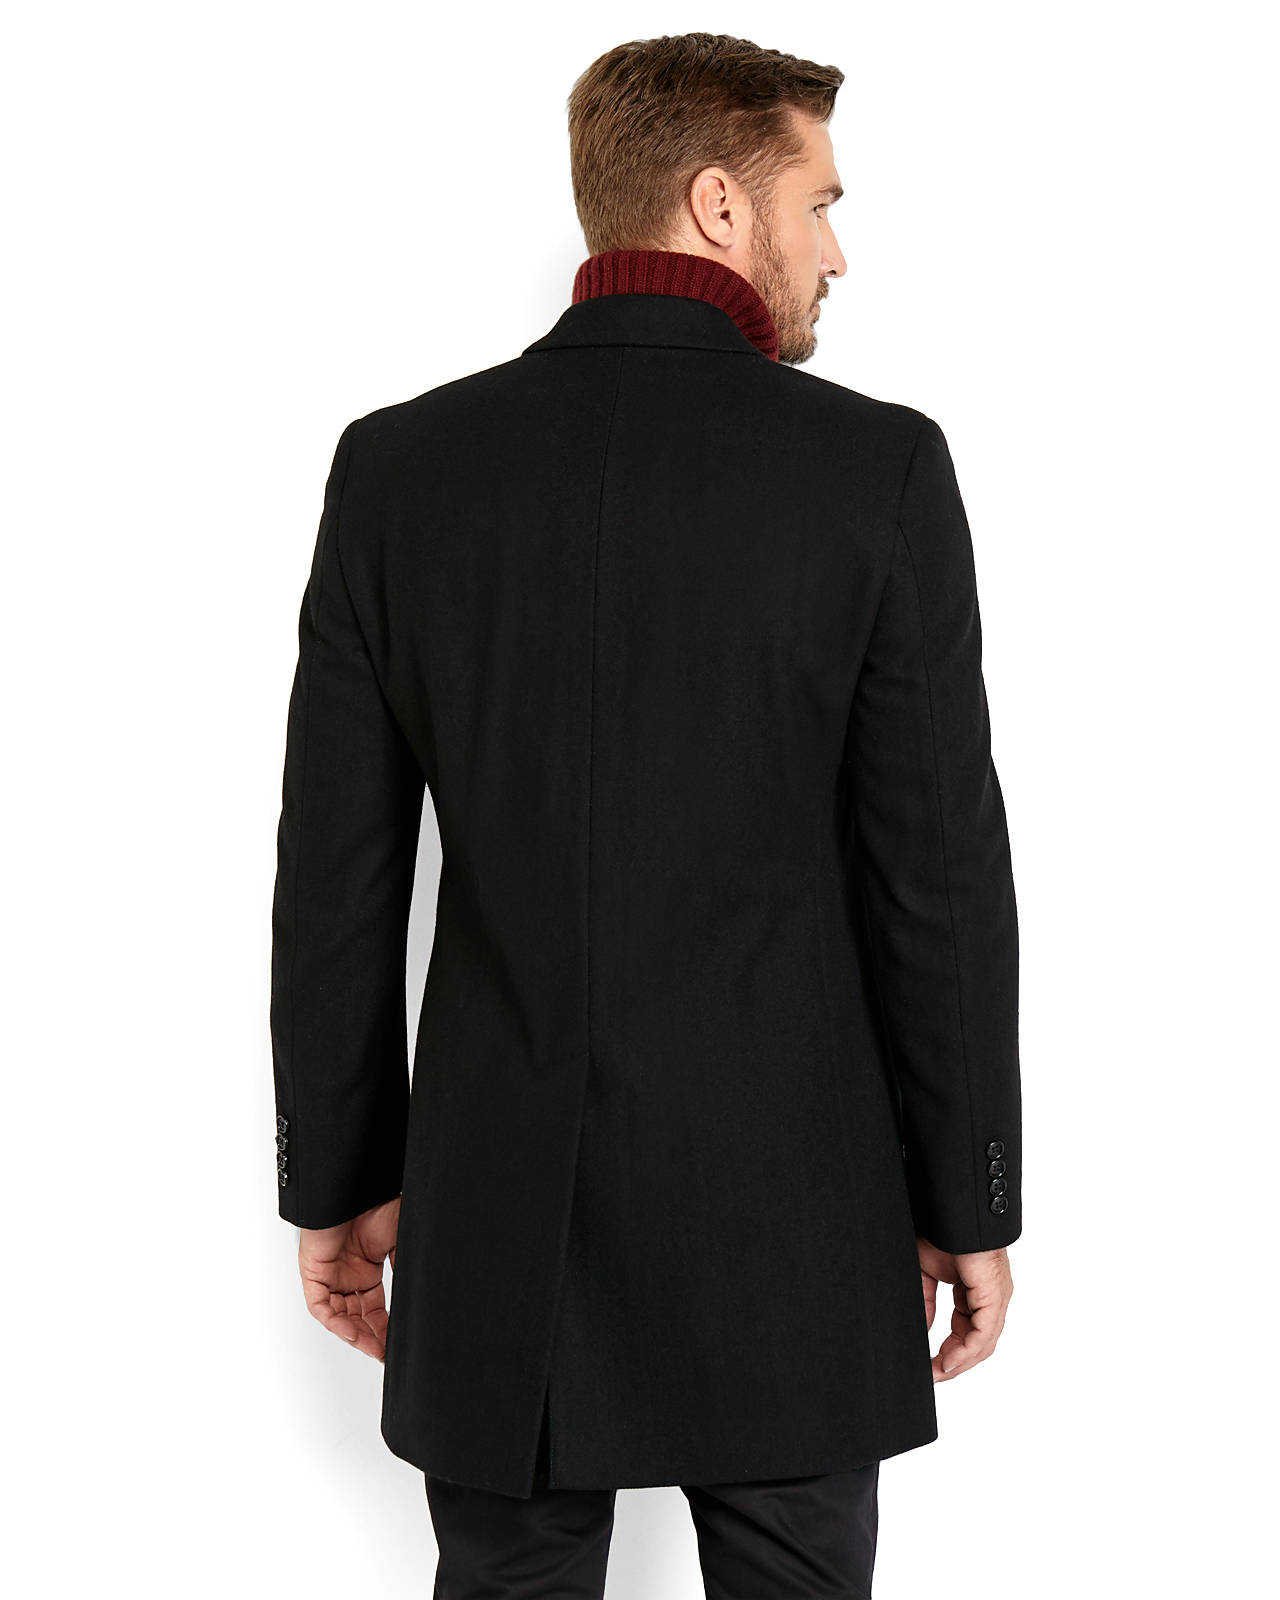 Lyst - Kenneth Cole Black Overcoat in Black for Men